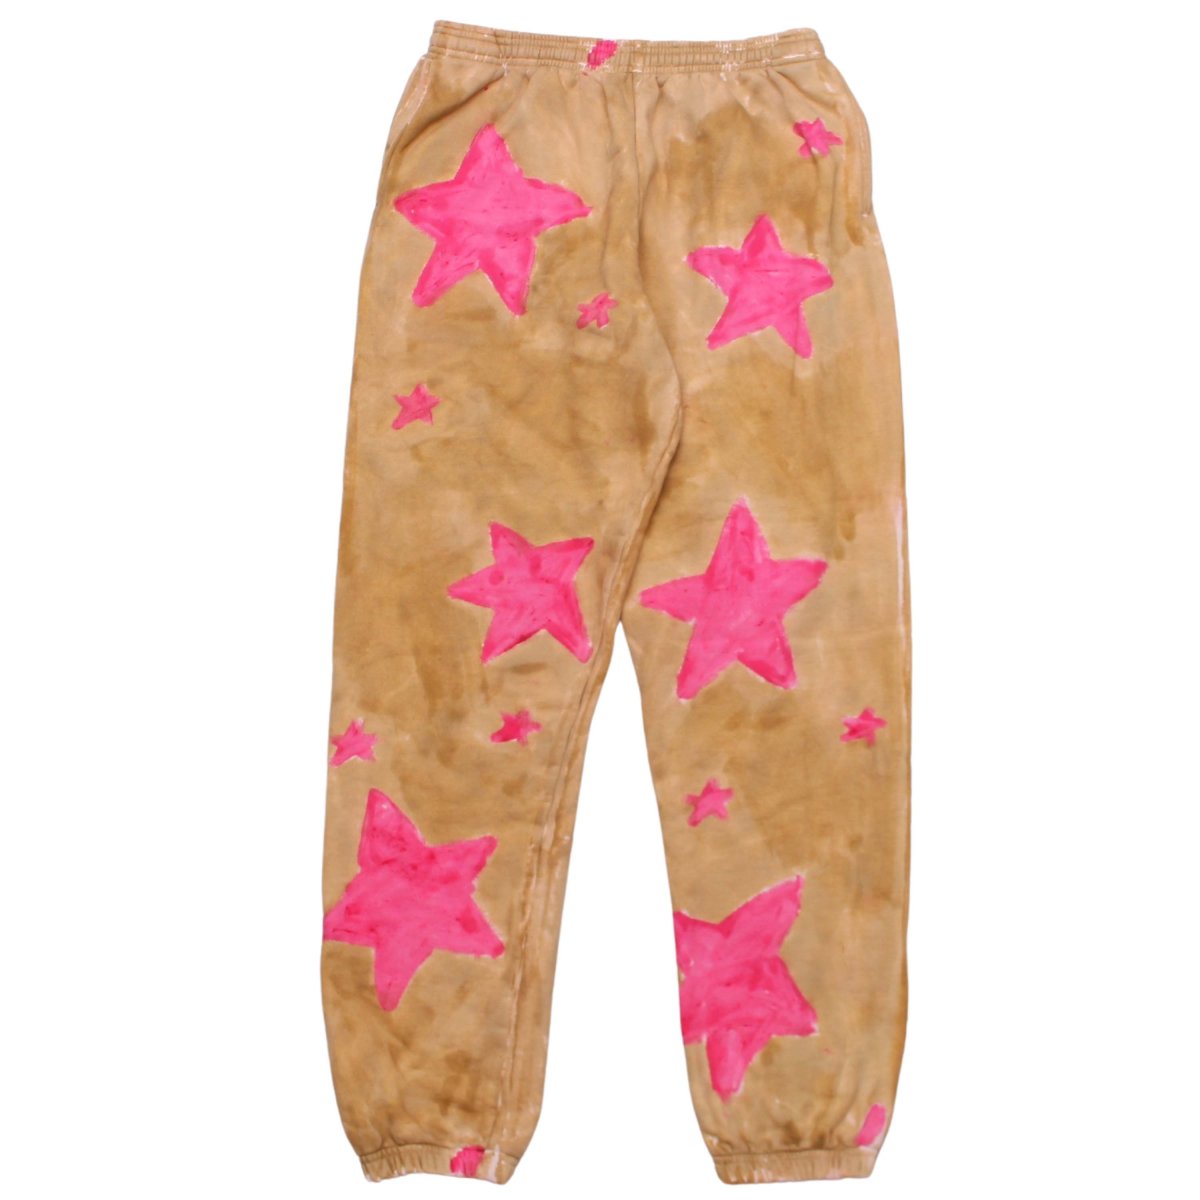 Sweatpants made in LA【 pink and tan star】